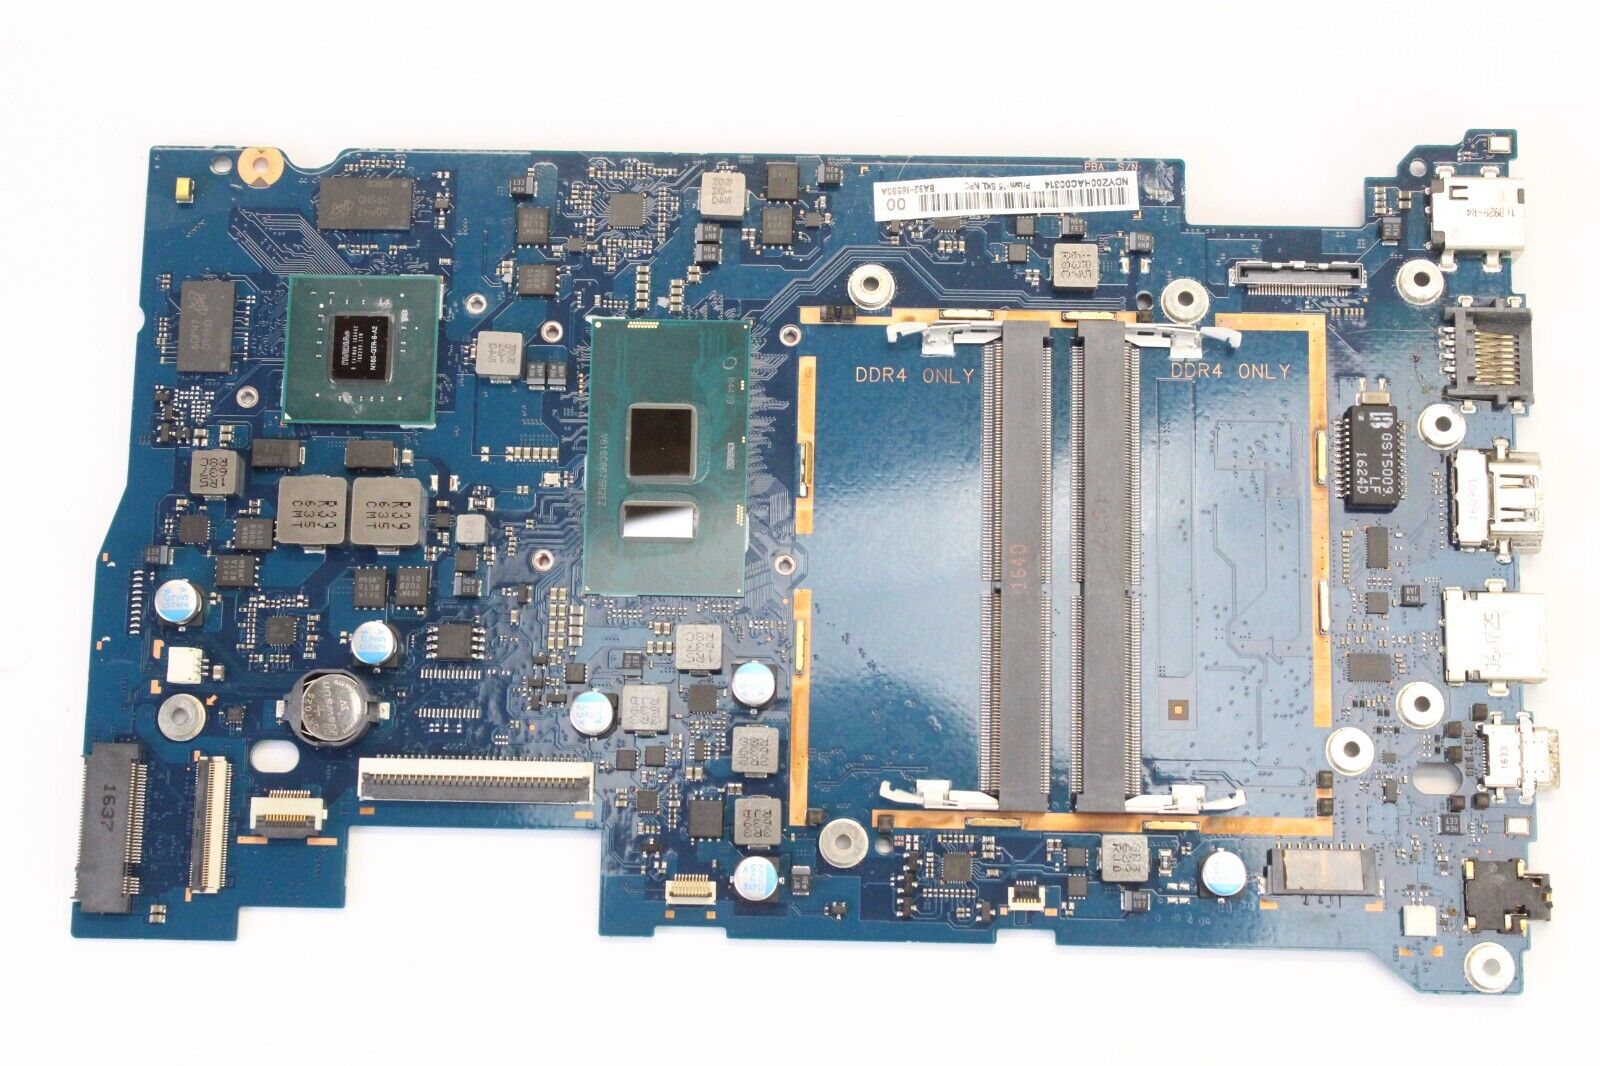 Samsung Notebook 7 Spin NP740U5L Core i7-6500U 2.50 GHz DDR4 Motherboard